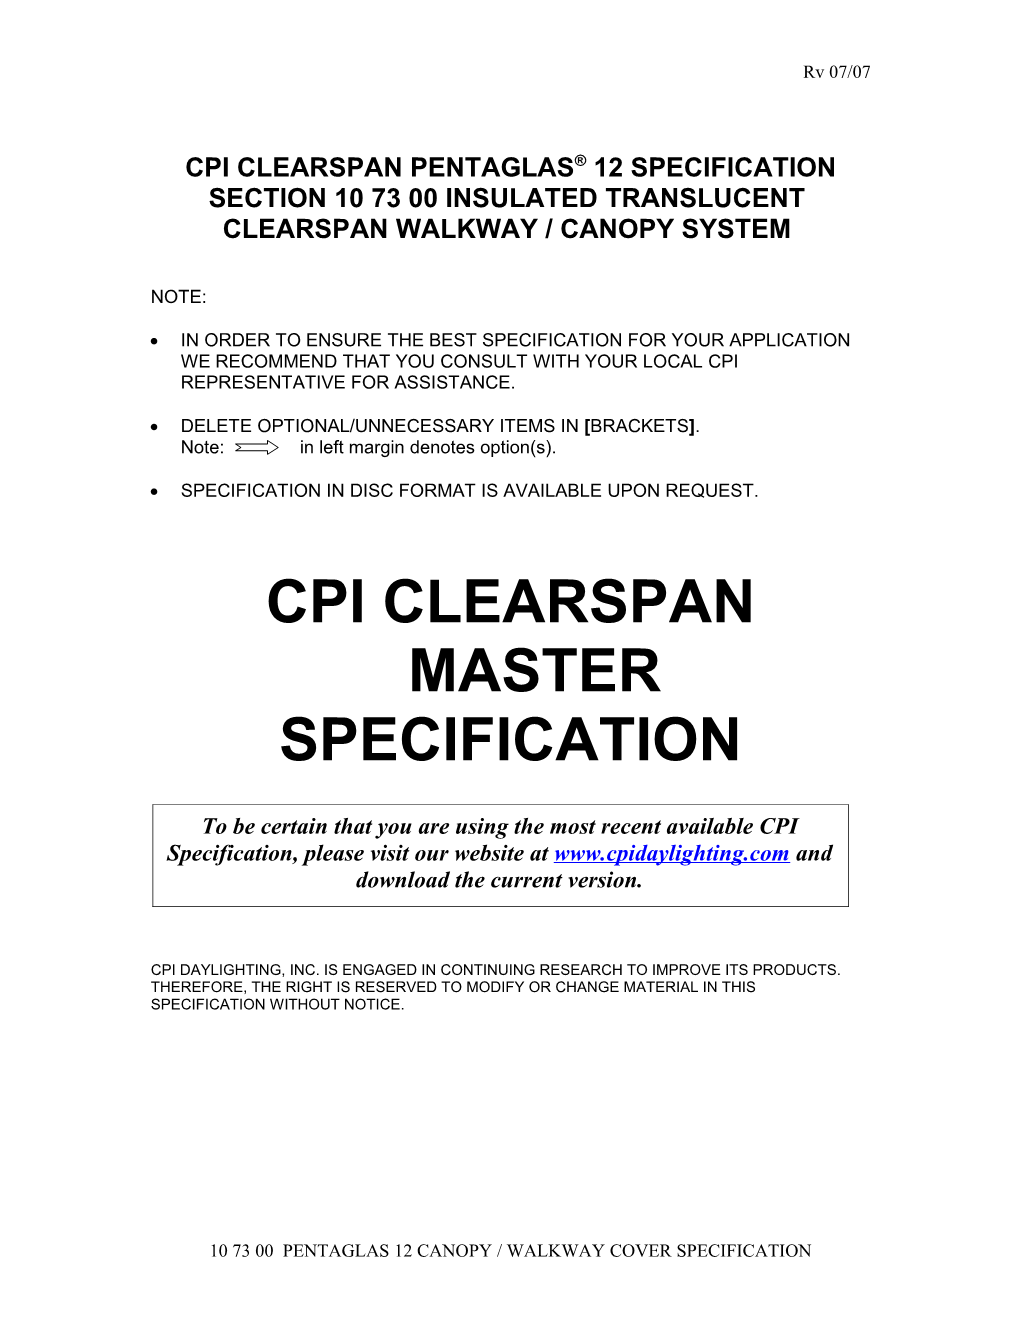 Cpi Clearspan Pentaglas 12 Specification